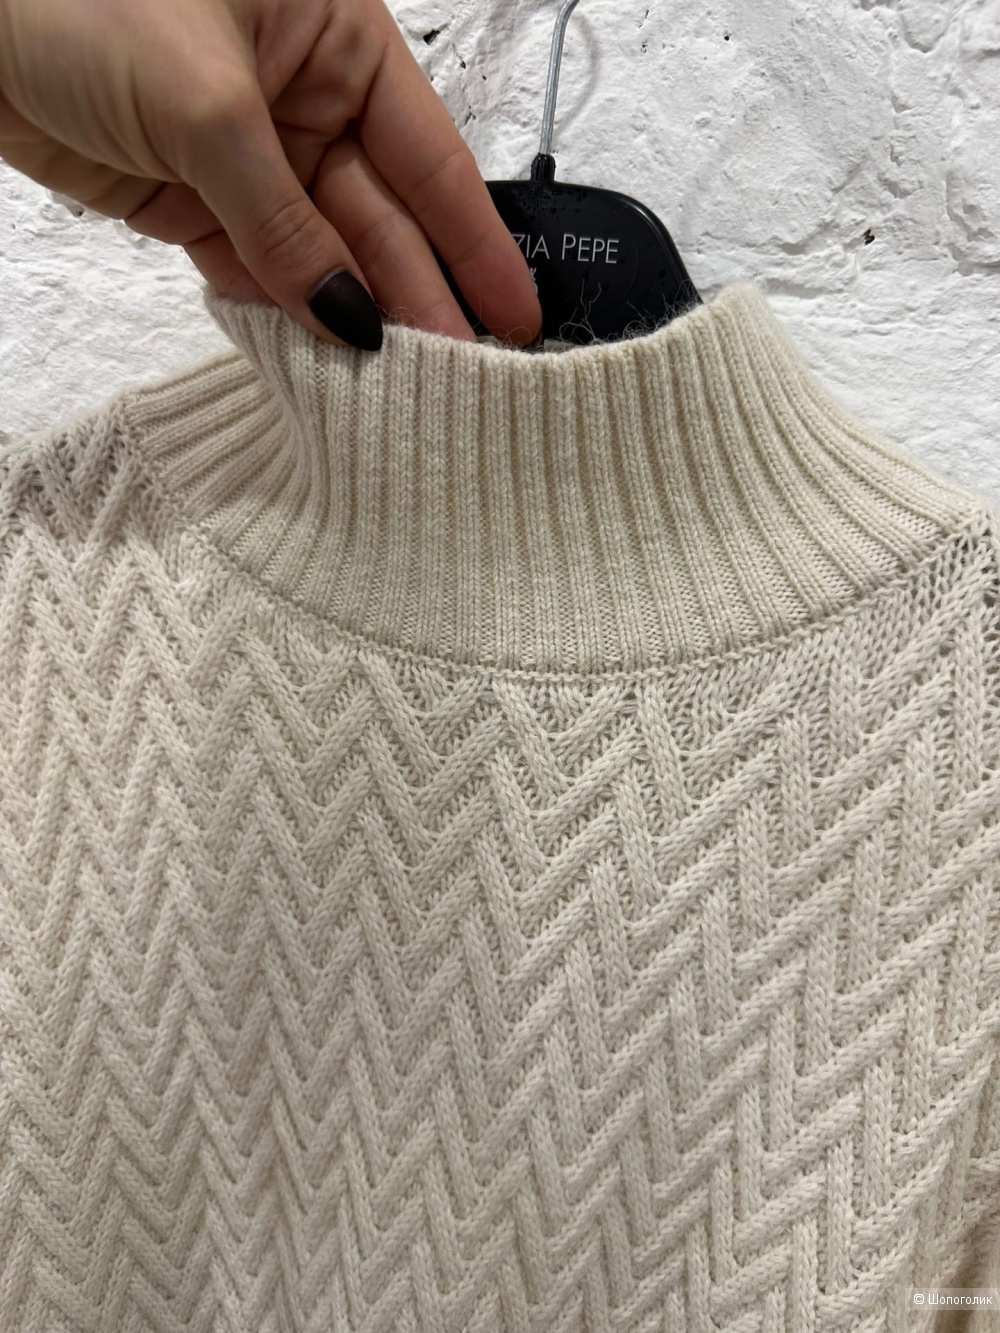 Пуловер  LAURA CLEMENT .Размер S-M.